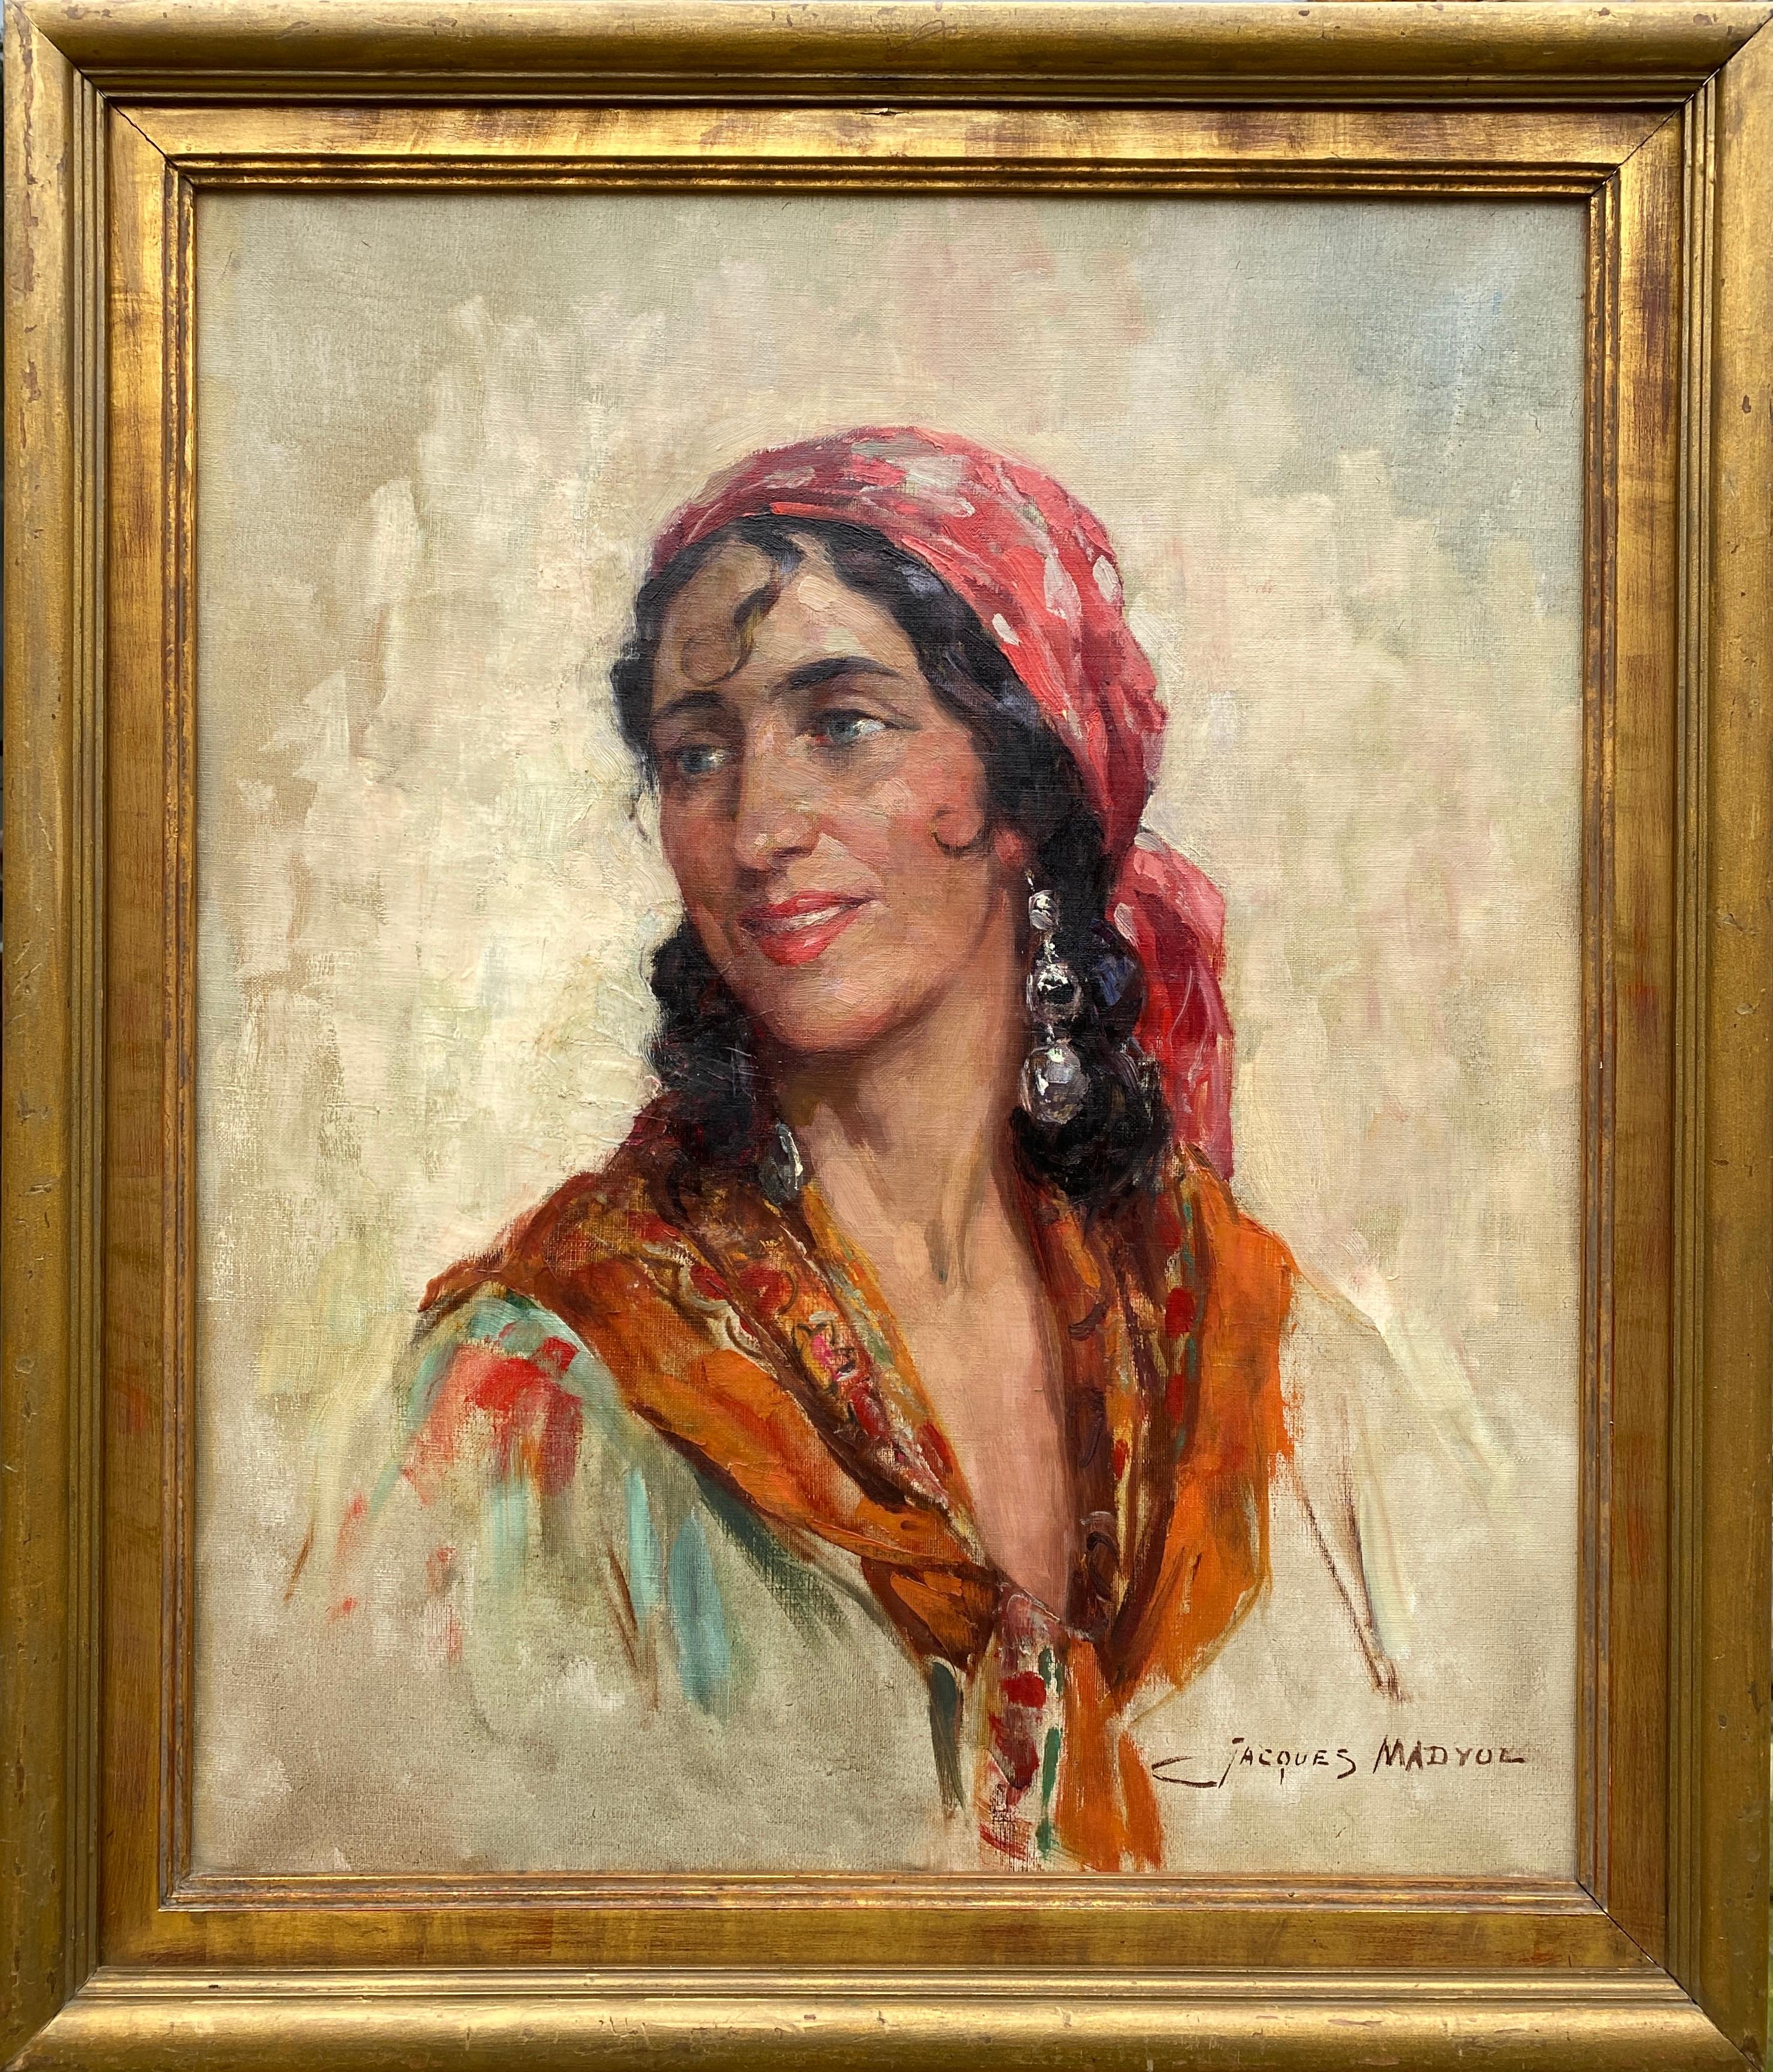 Jacques Madyol, Brüssel 1871 - 1950, Belgischer Maler, Eine Zigeunerin